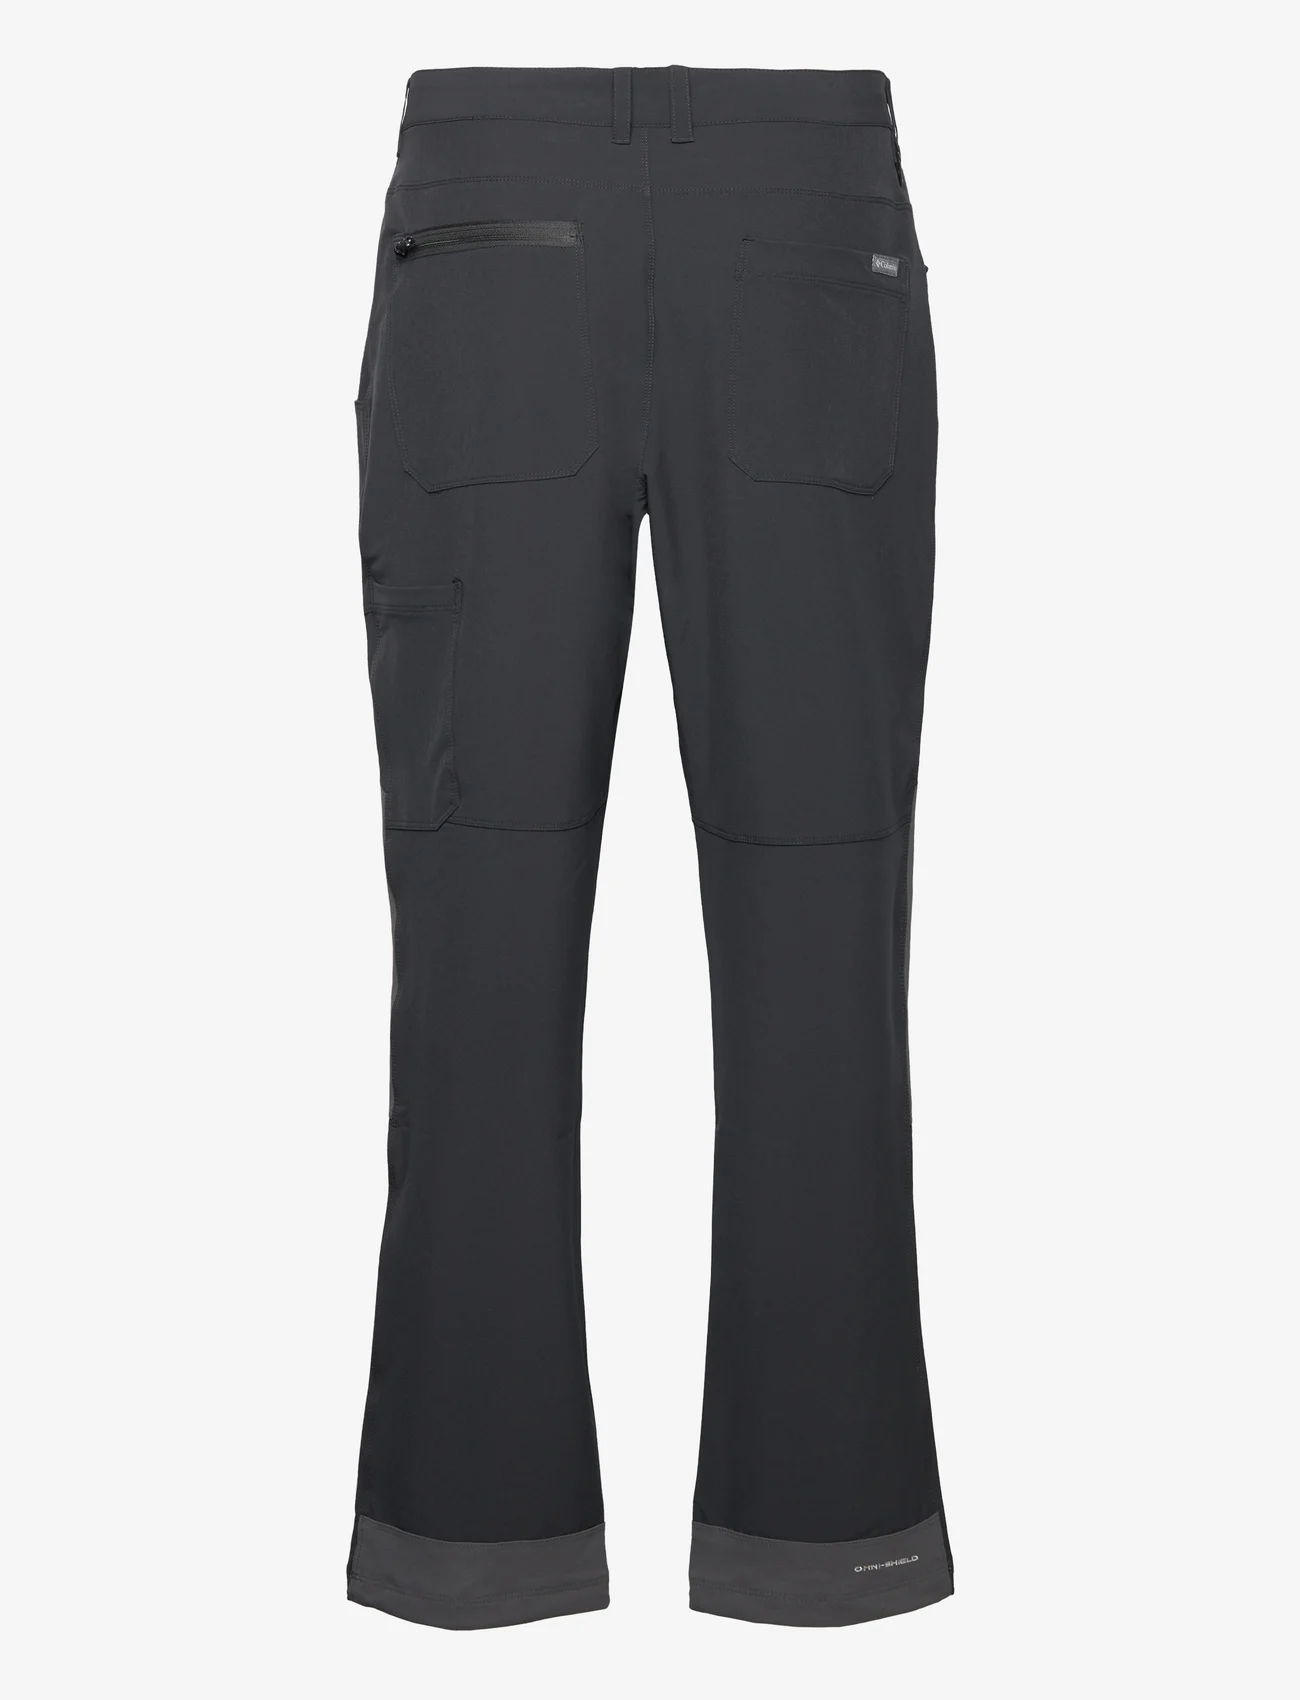 Columbia Sportswear - Landroamer Utility Pant - ulkoiluhousut - black - 1